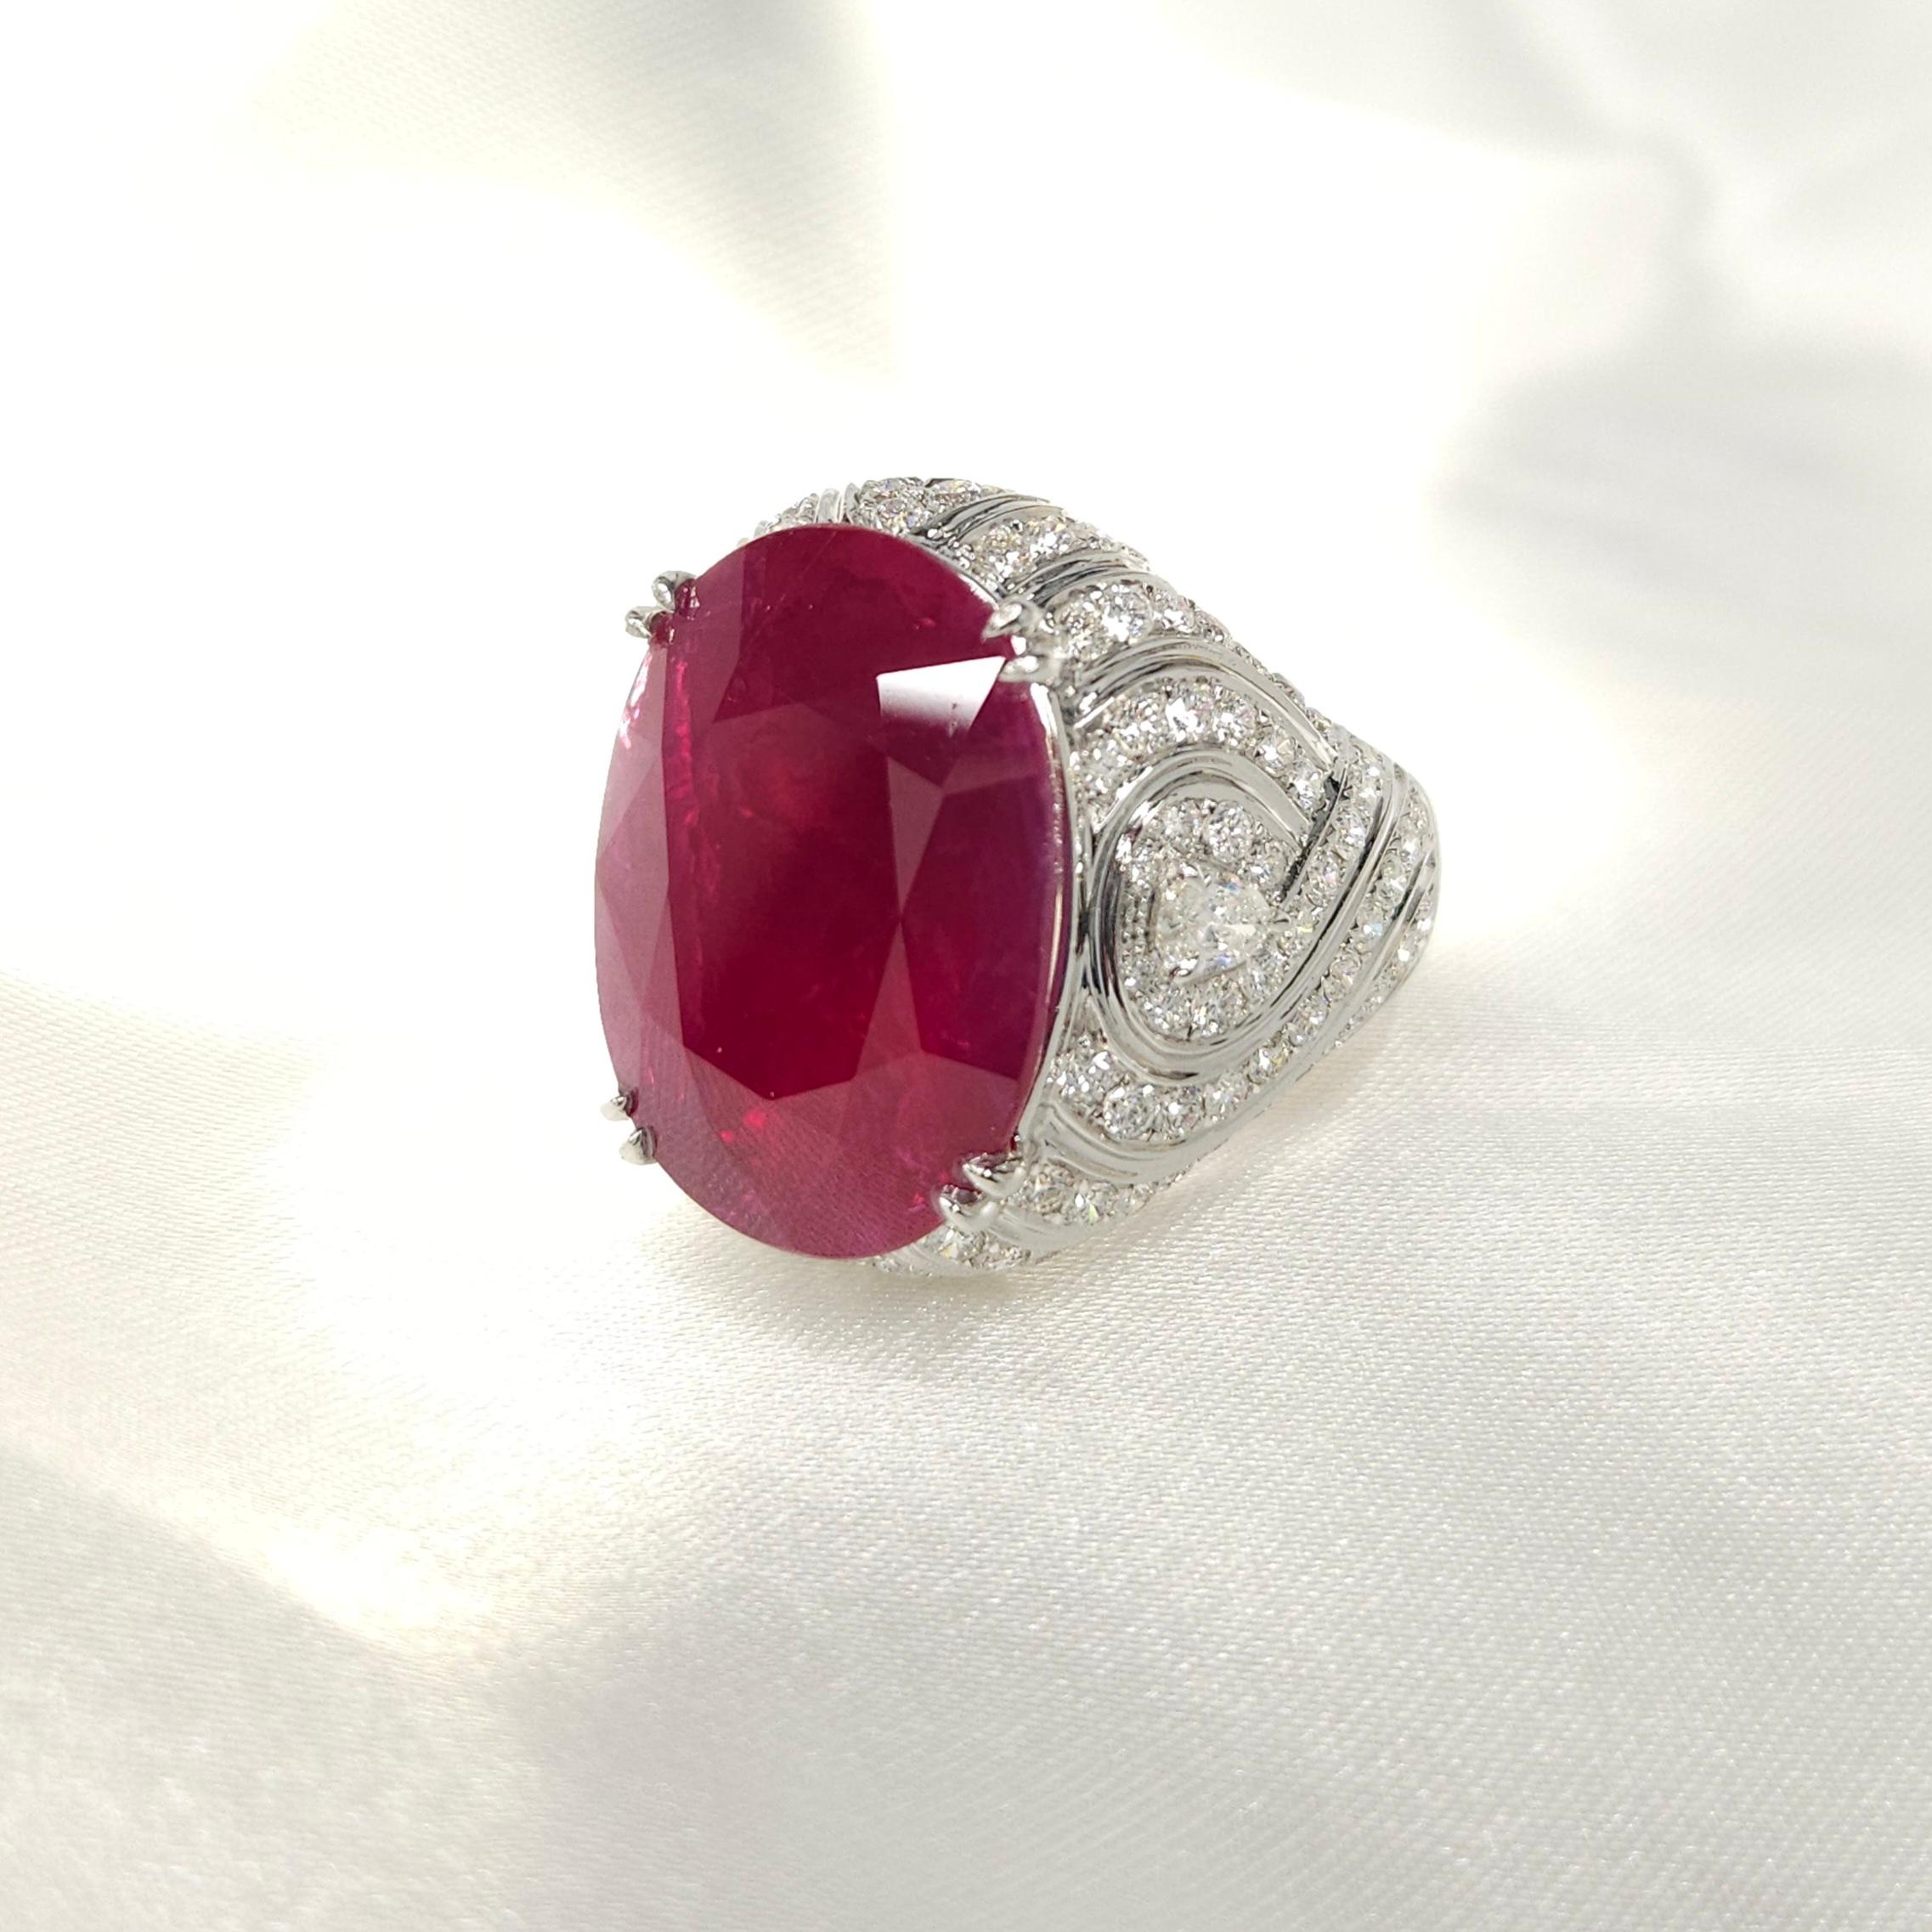 IGI Certified Rare 25.49 Carat Burma Ruby & Diamond Ring in 18K White Gold For Sale 1